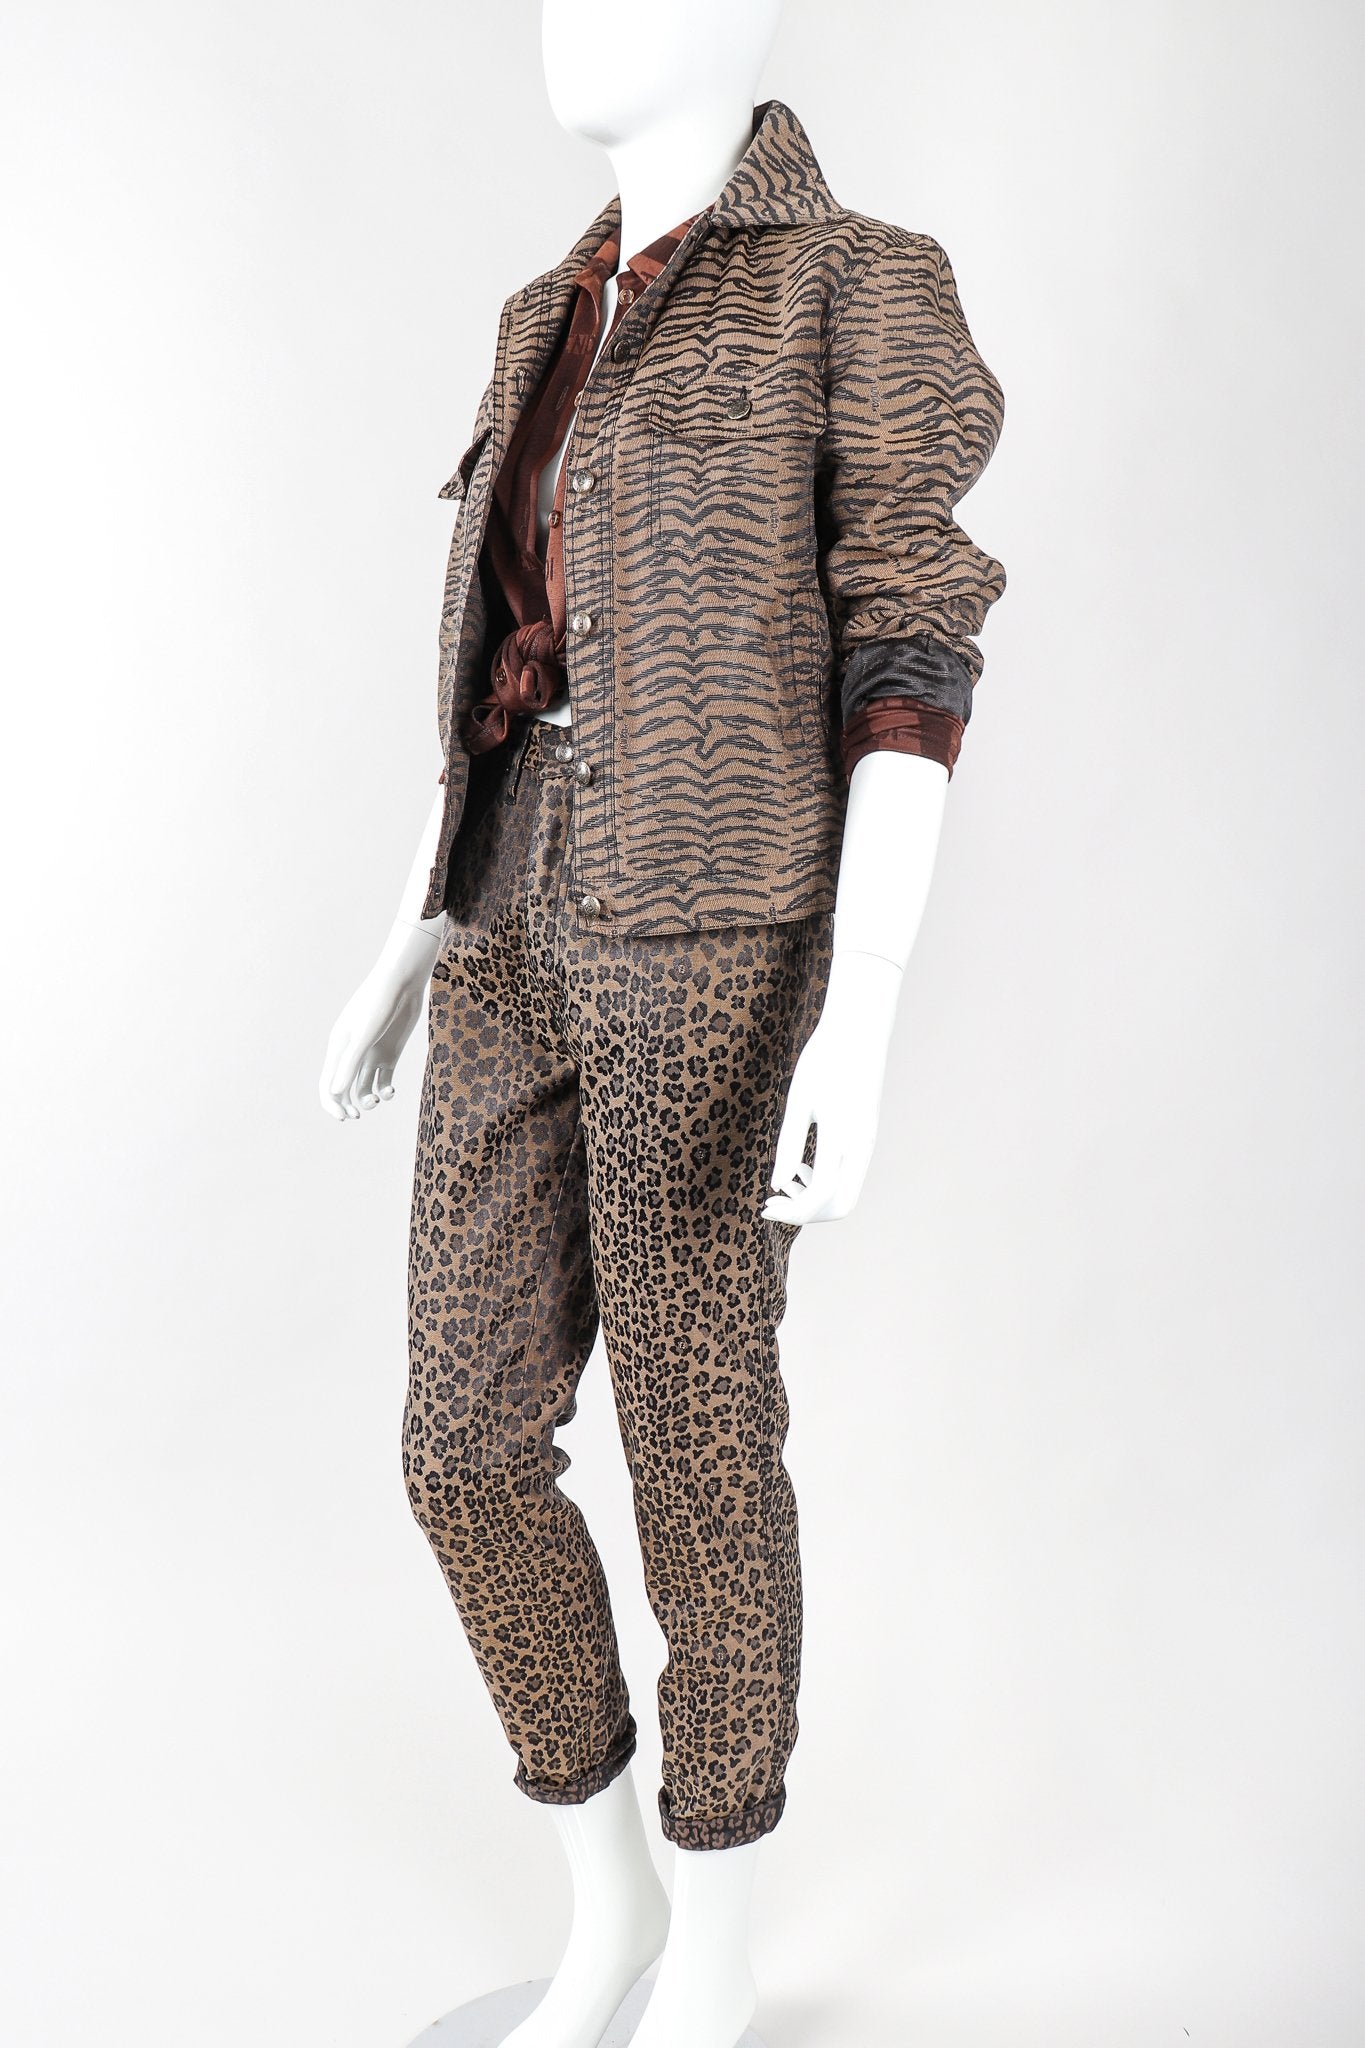 Recess Vintage Fendi Outfit with Tiger Jean Jacket, Leopard Jeans, & Stripe Blouse on mannequin